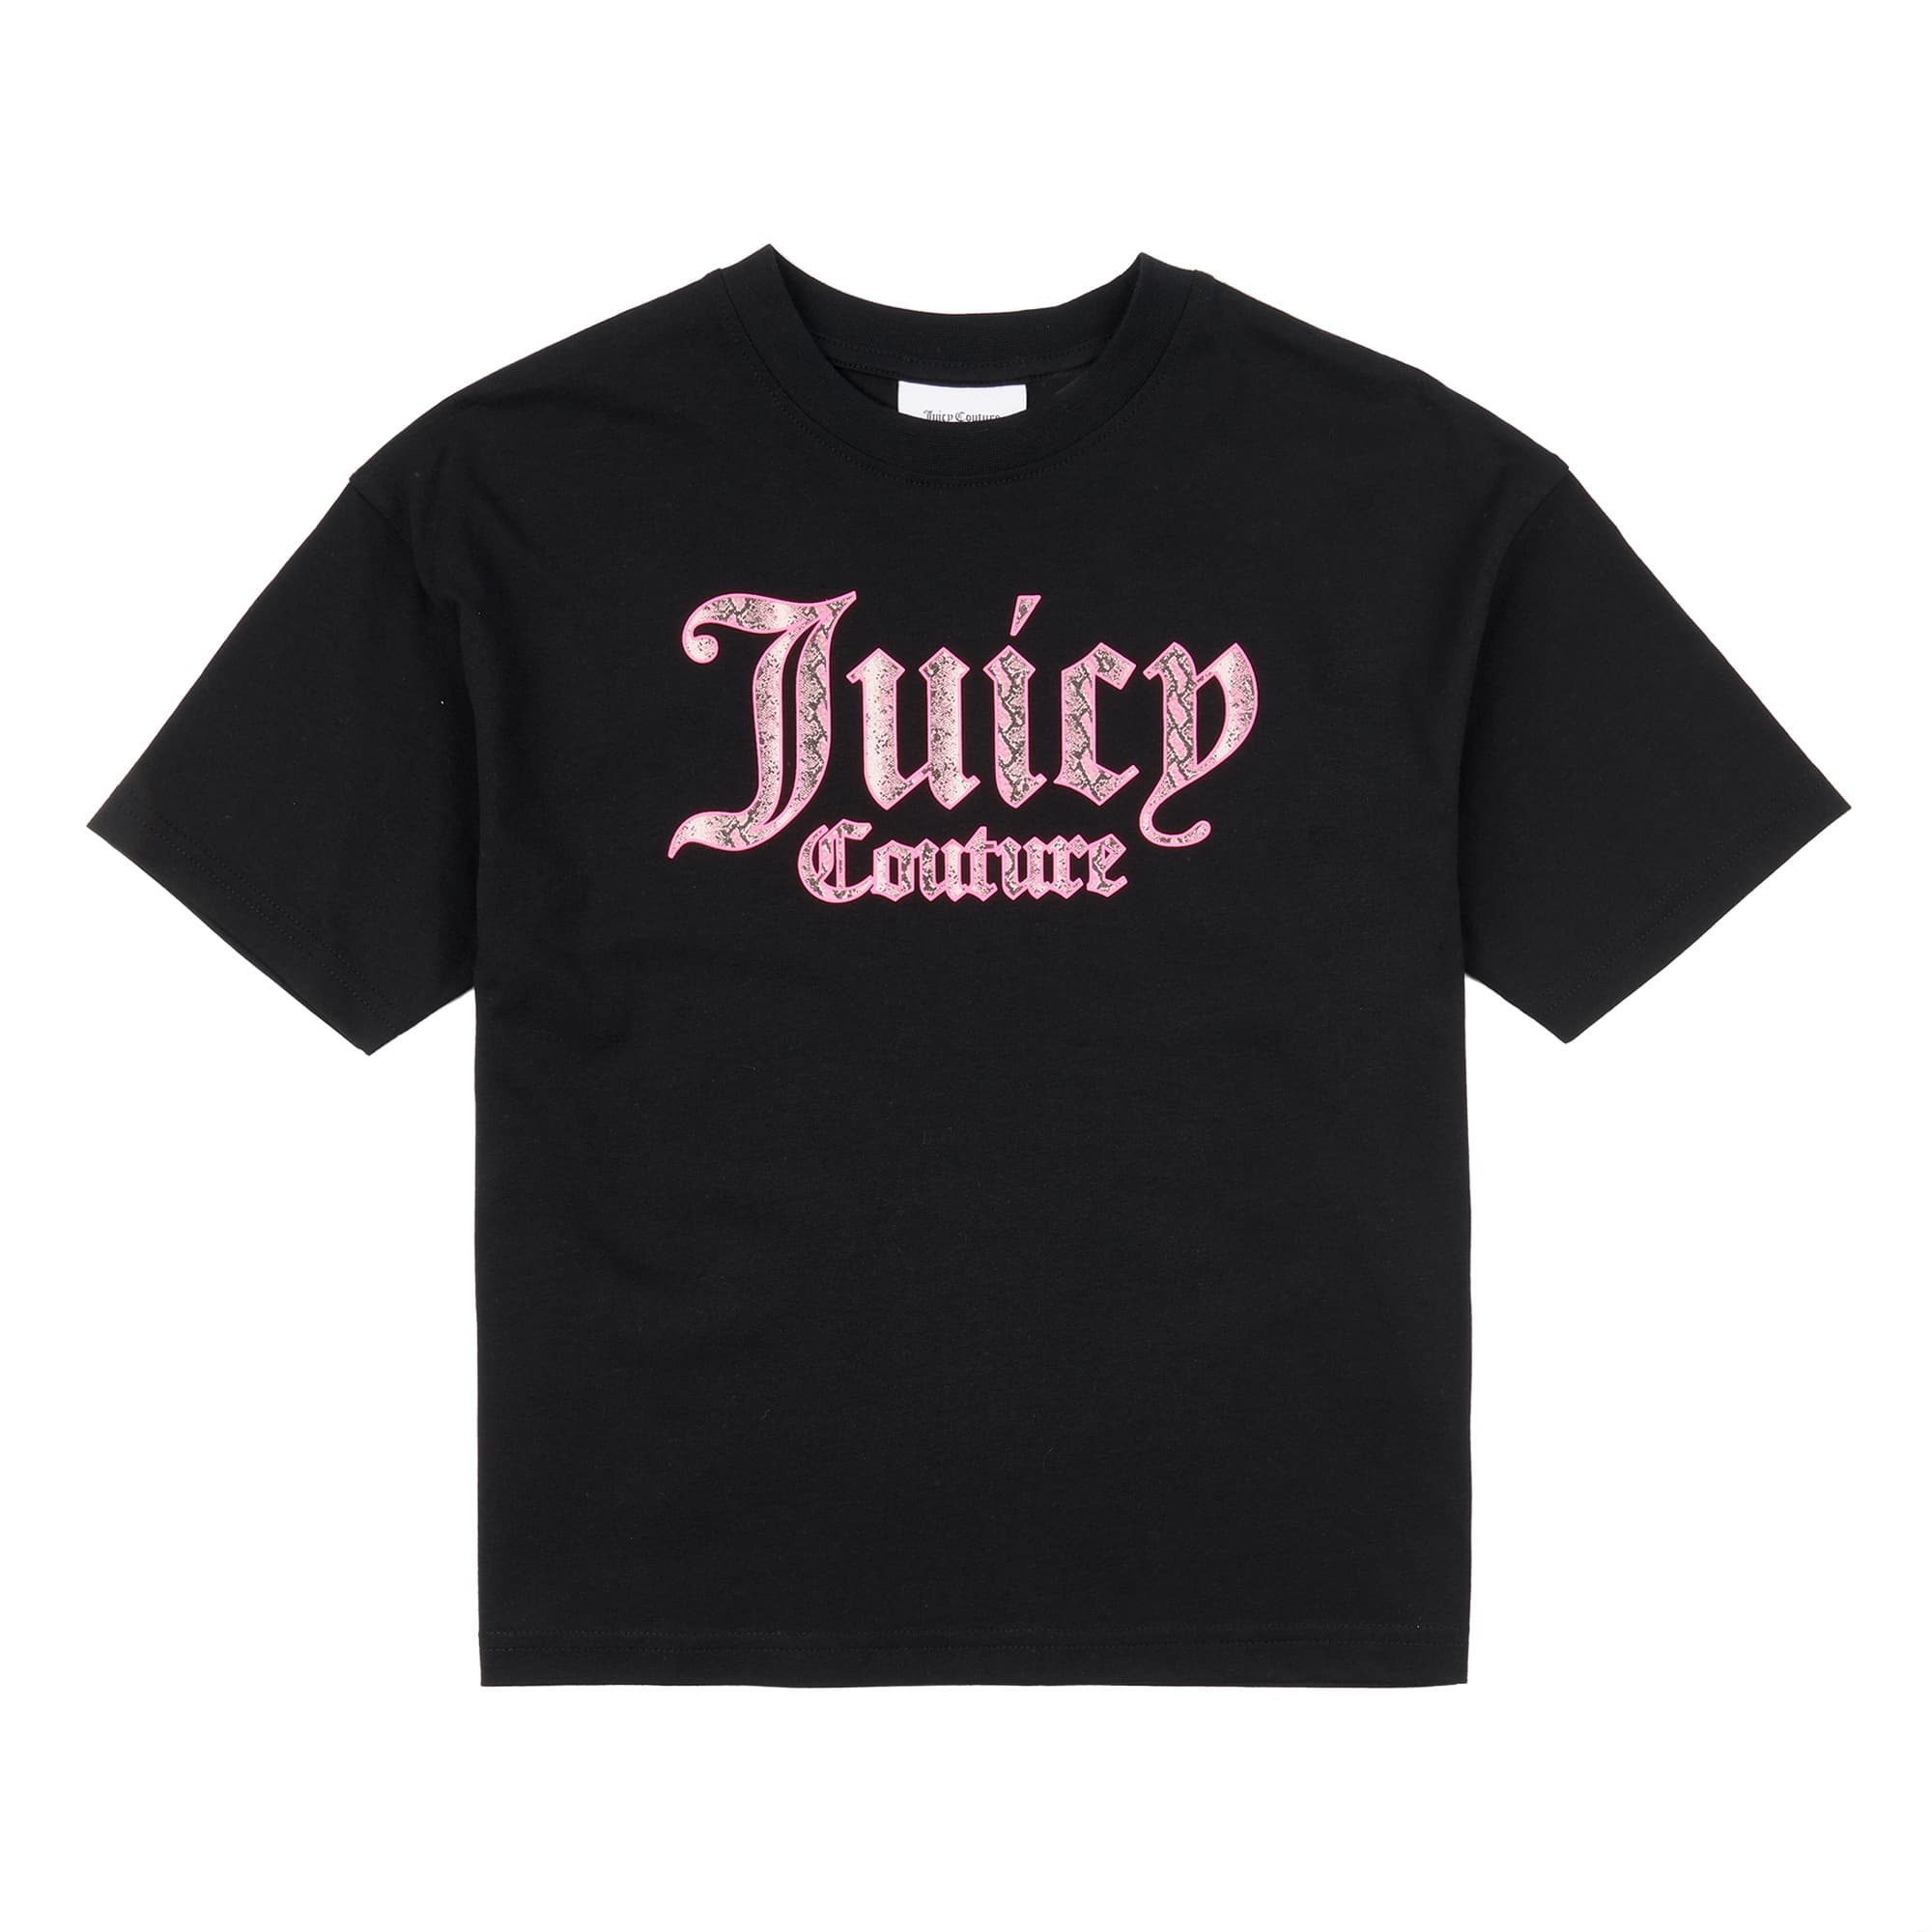 Juicy Couture girls black tshirt